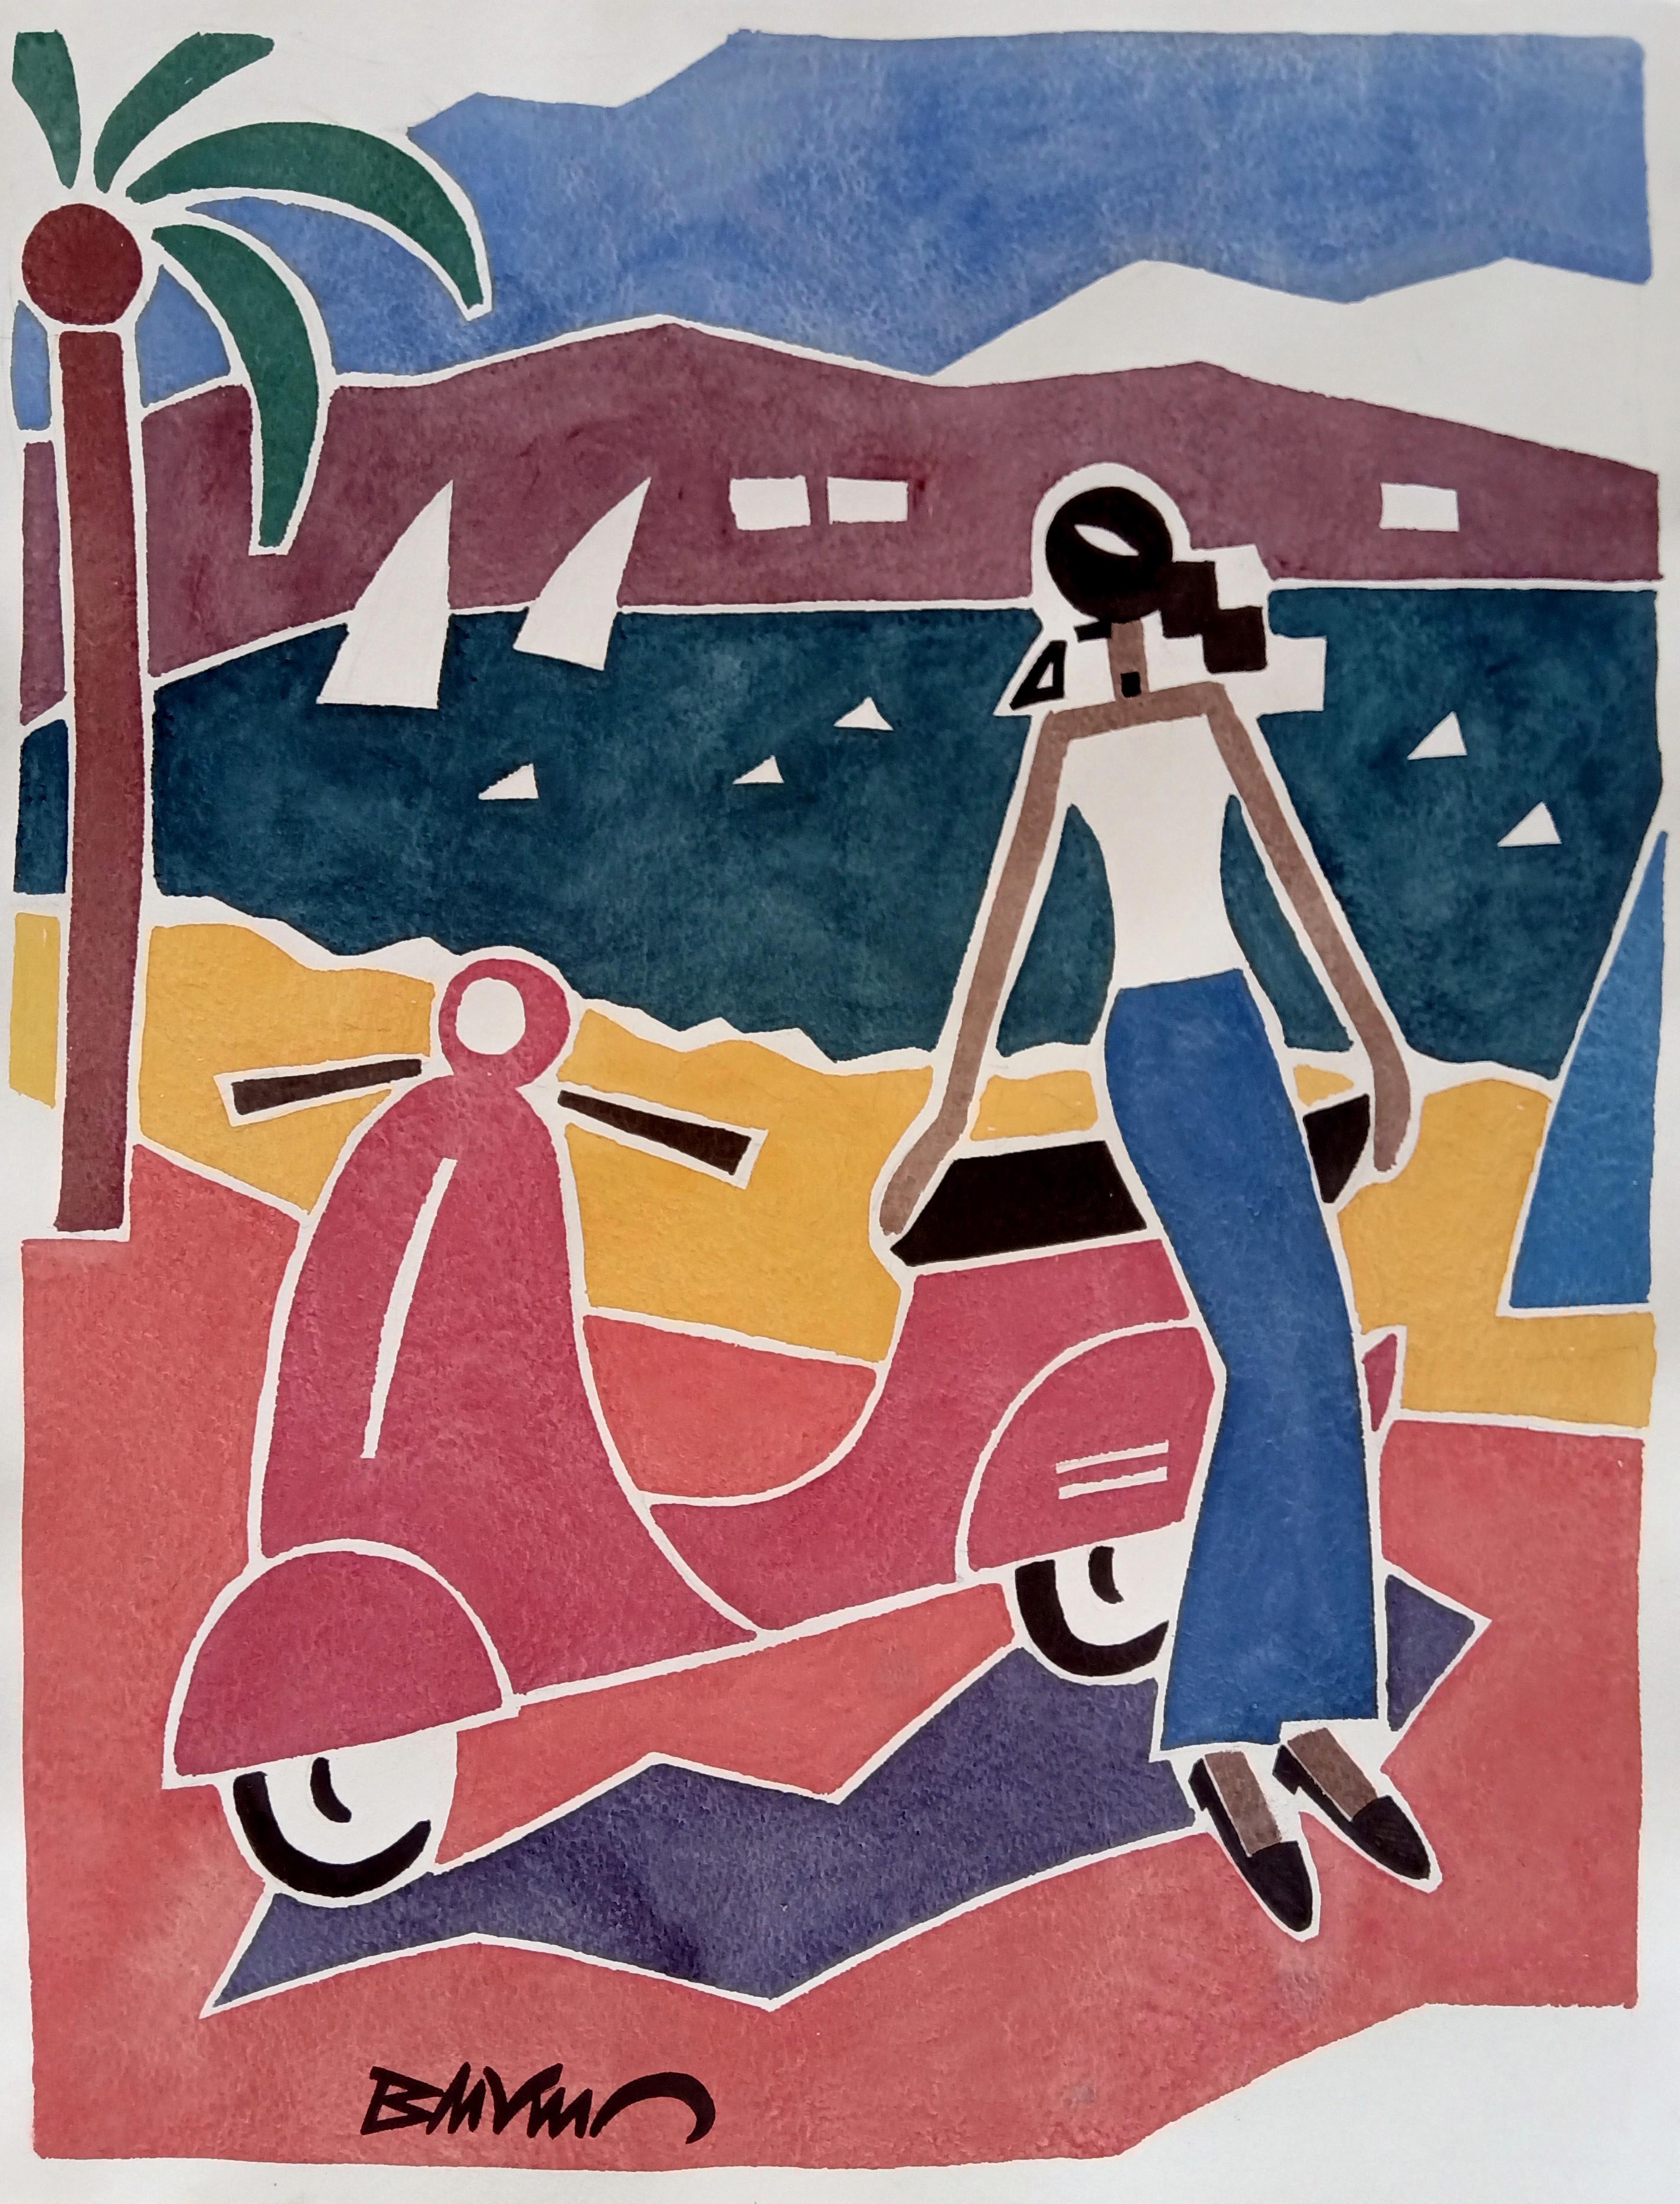 Bertrand de Vismes Figurative Art - "Women on scooter" figurative drawing, watercolors ink on paper